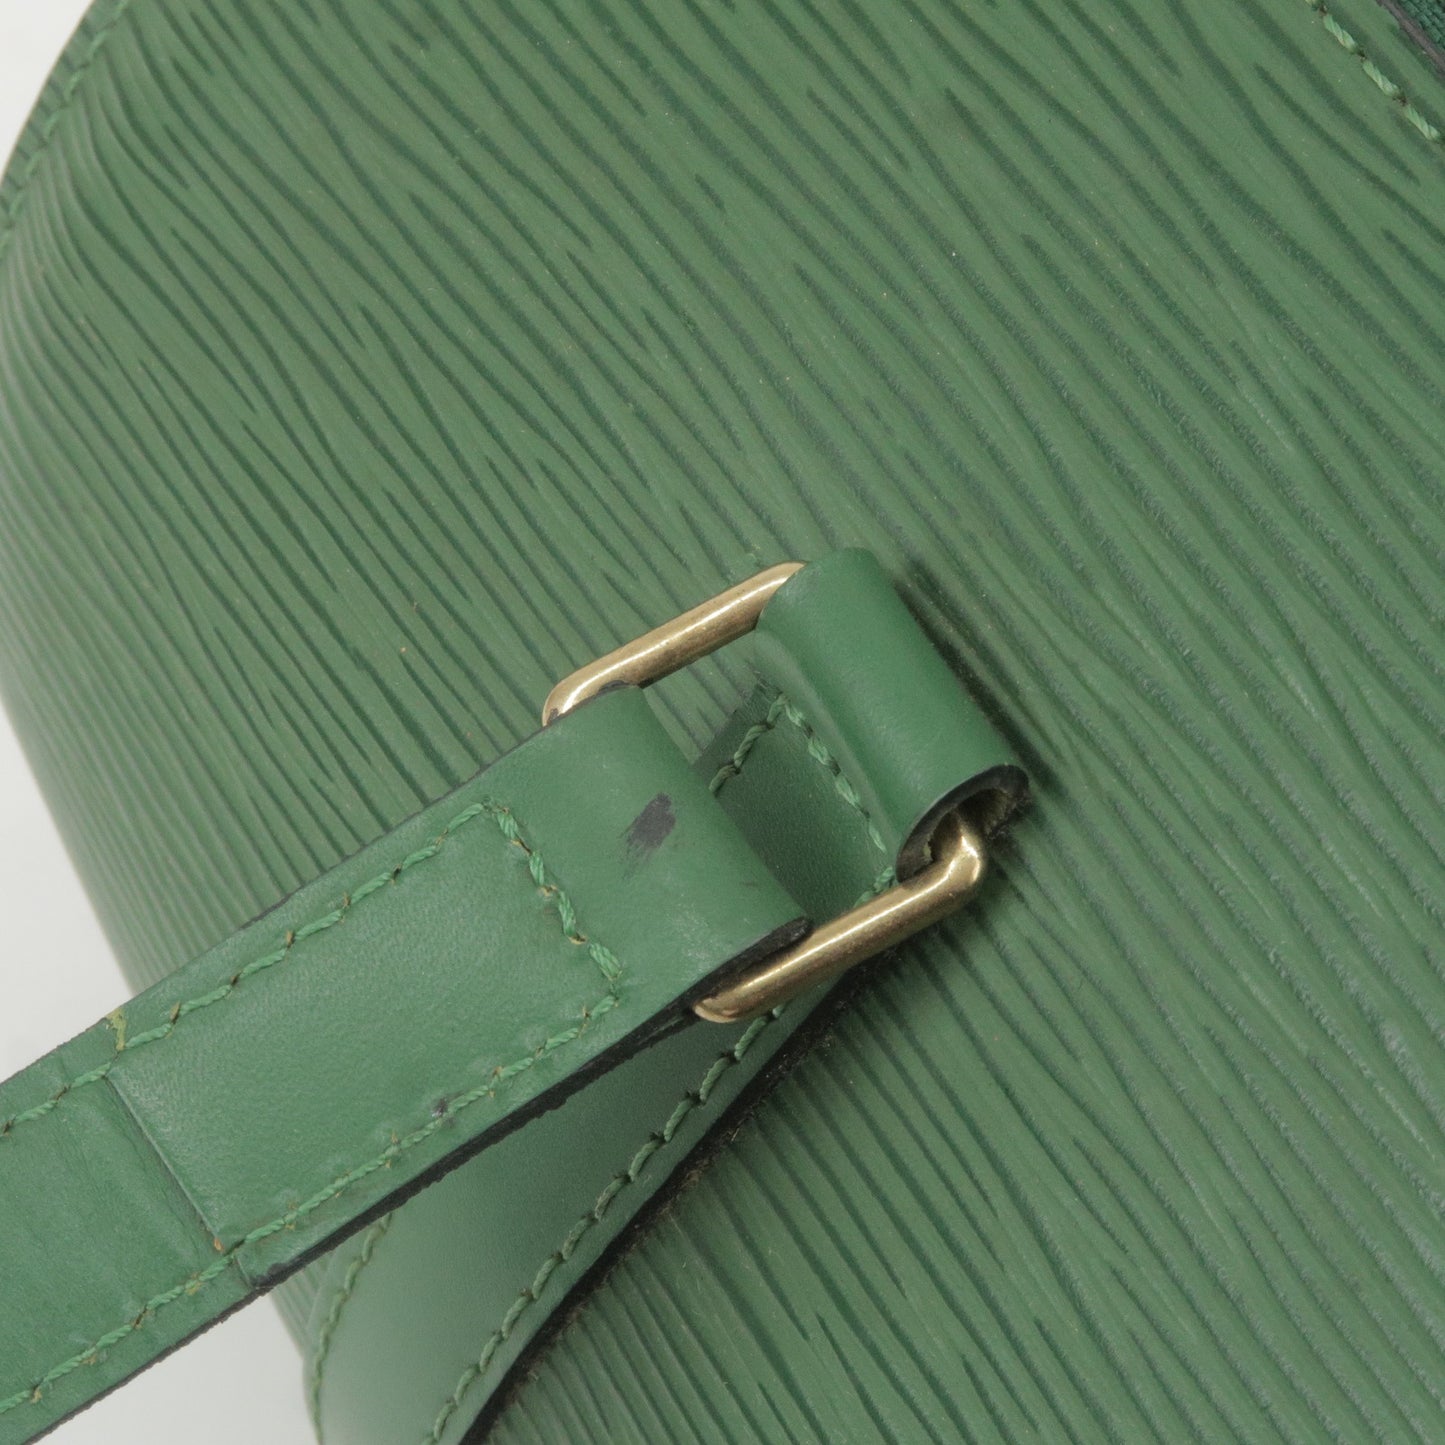 Louis Vuitton Epi Soufflot Shoulder Bag Hand Bag Green M52224